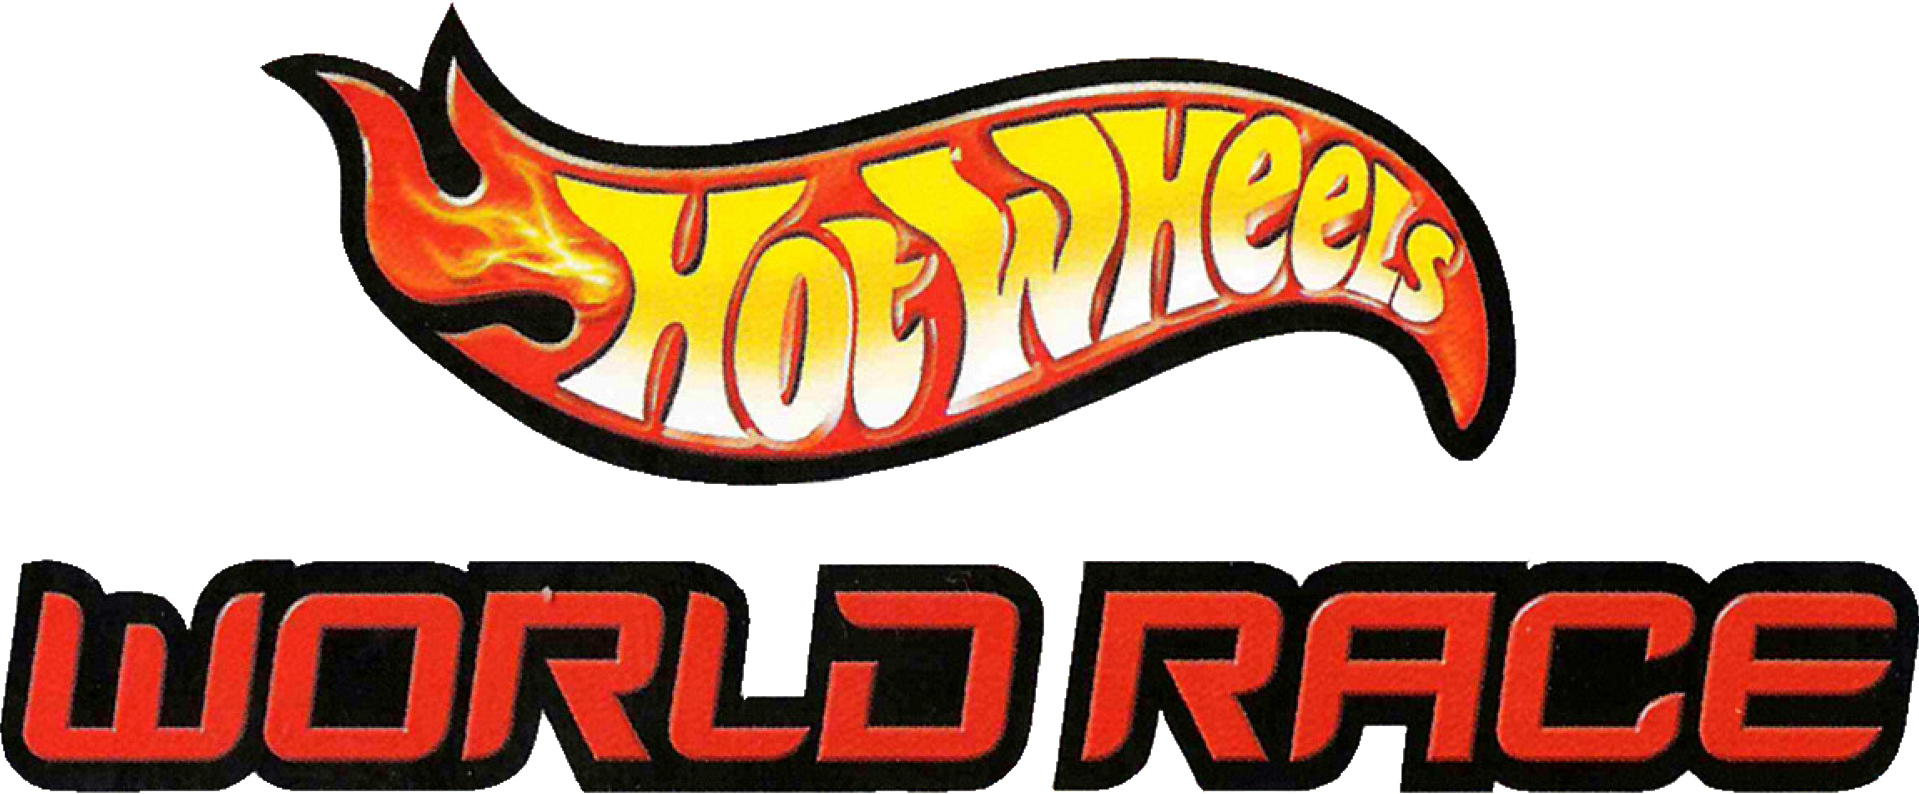 Hot Wheels World Race Logo PNG